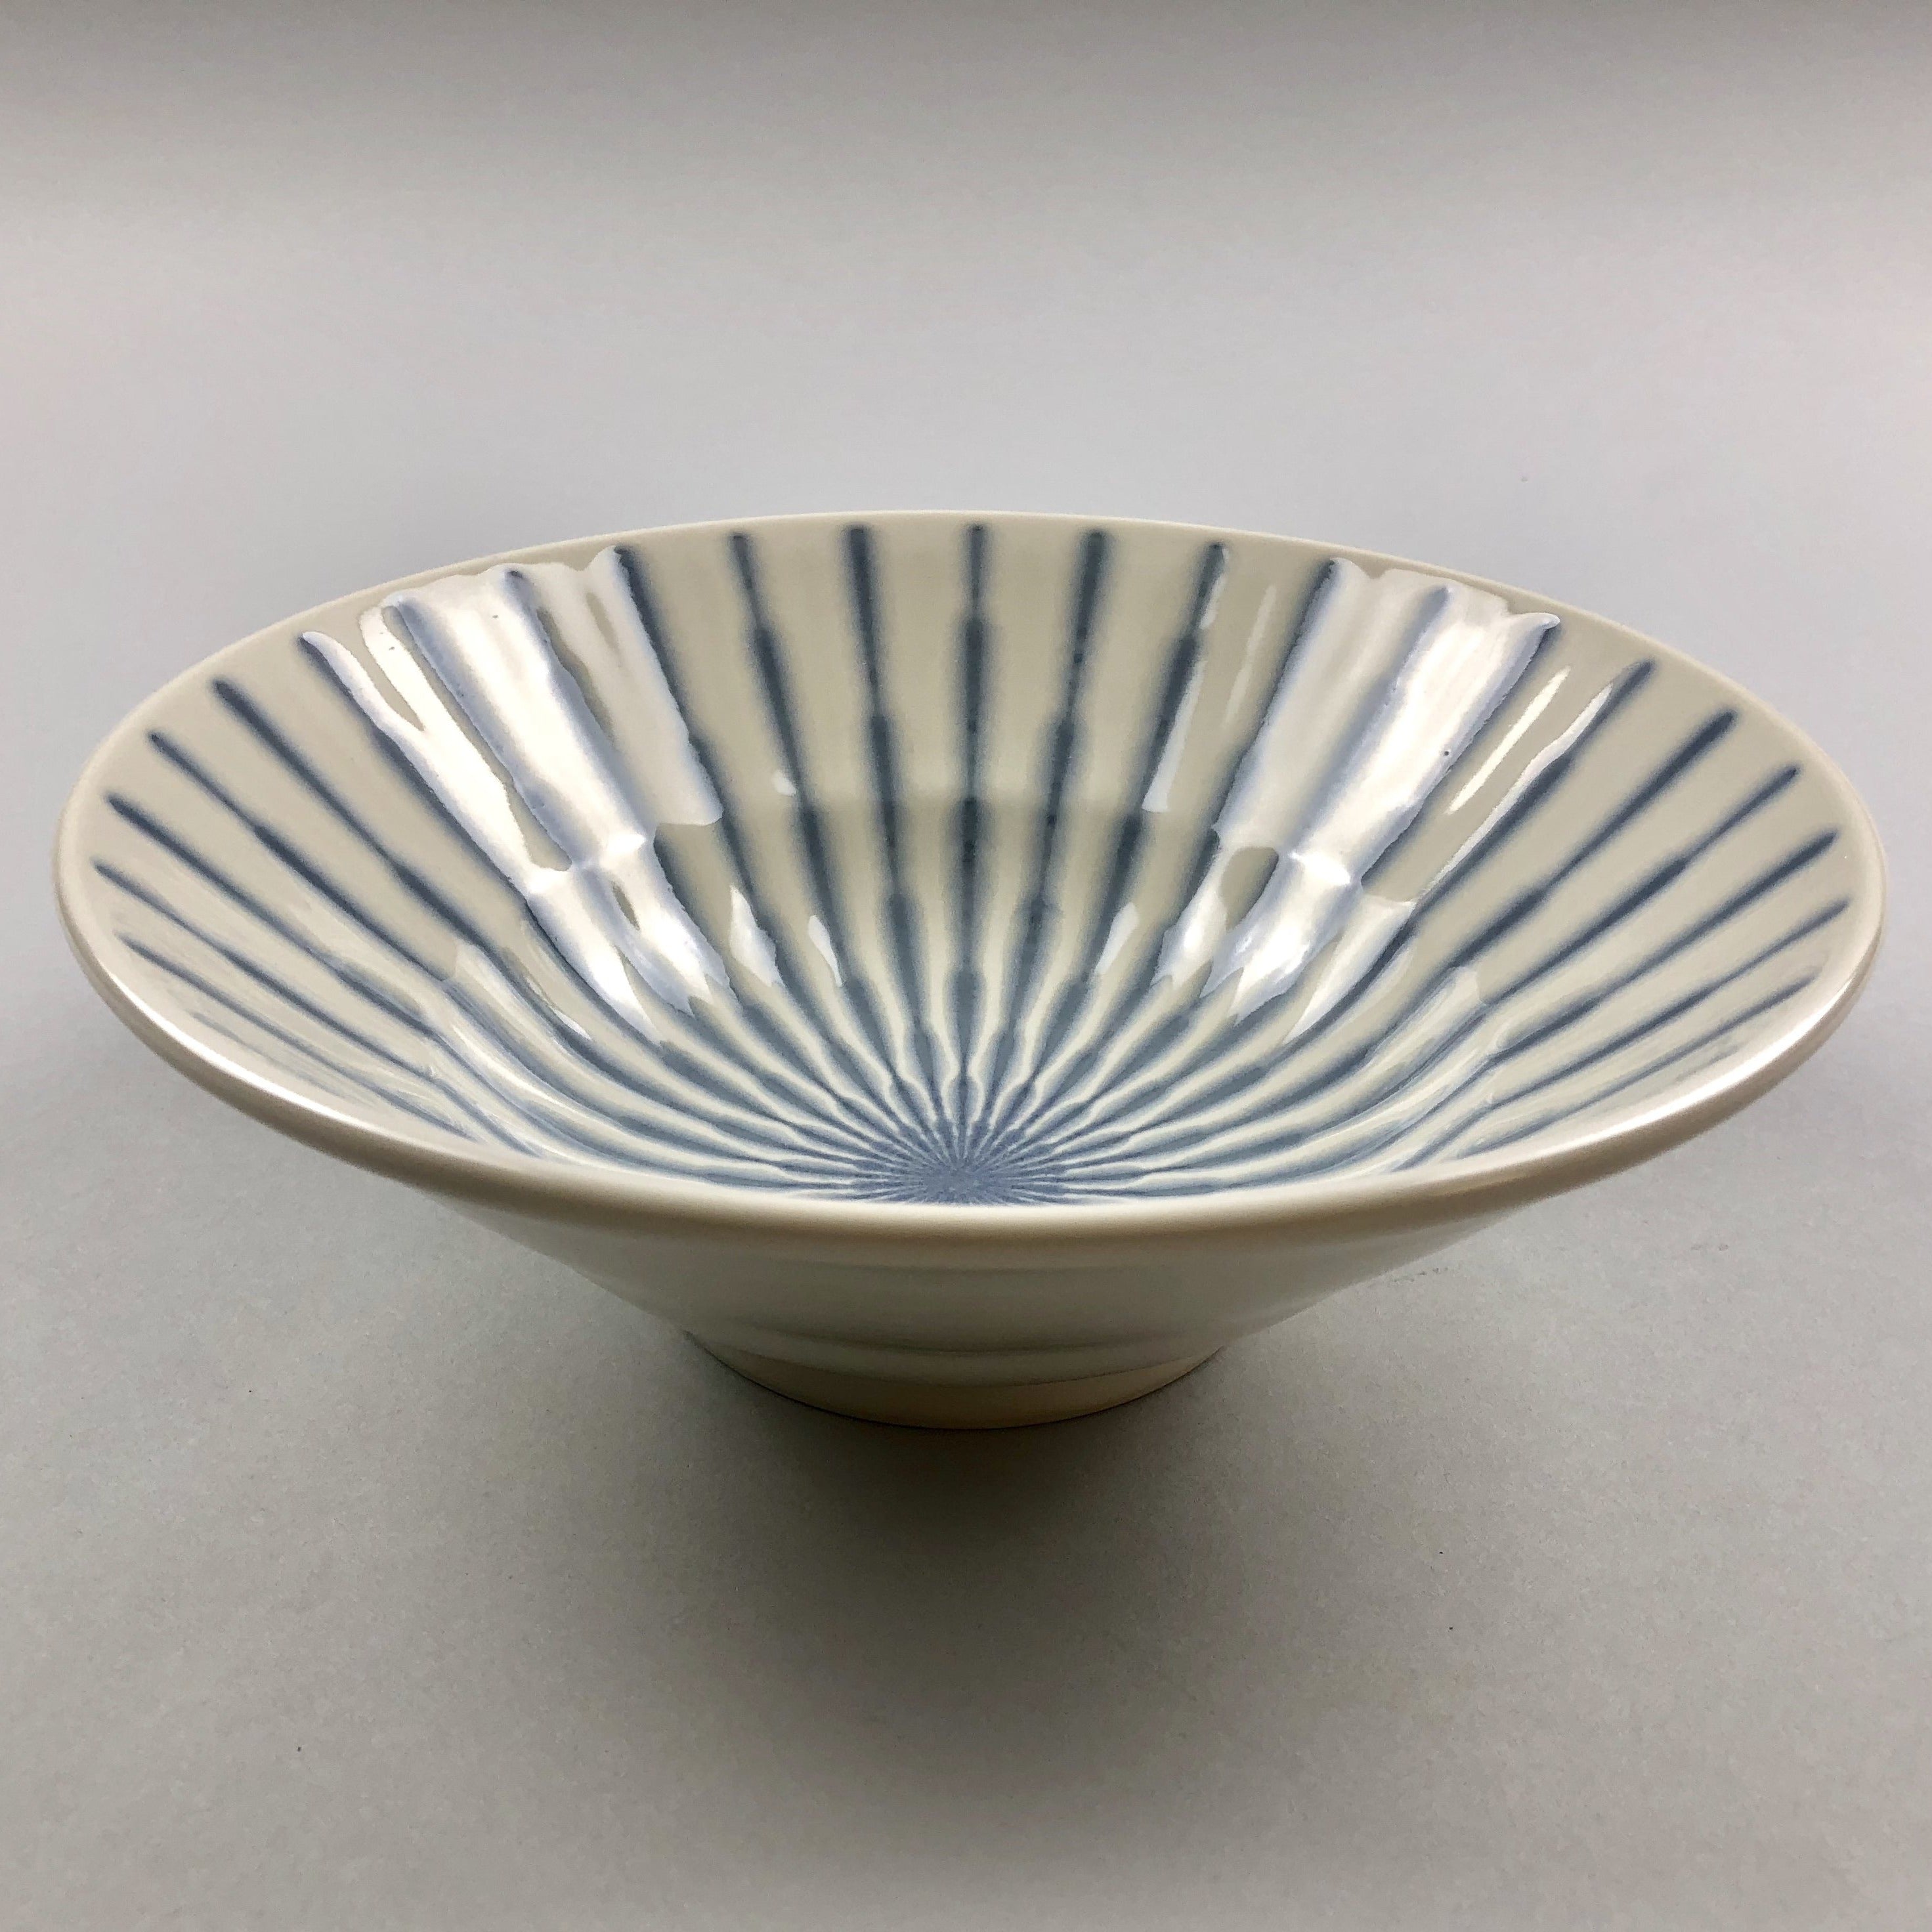 Restaurant Equipment 日本食 日式厨具 Discount 和食 Manhattan New York Japanese Ceramics Stripe Bowl Plate Colored Dinnerware Tableware Bowery